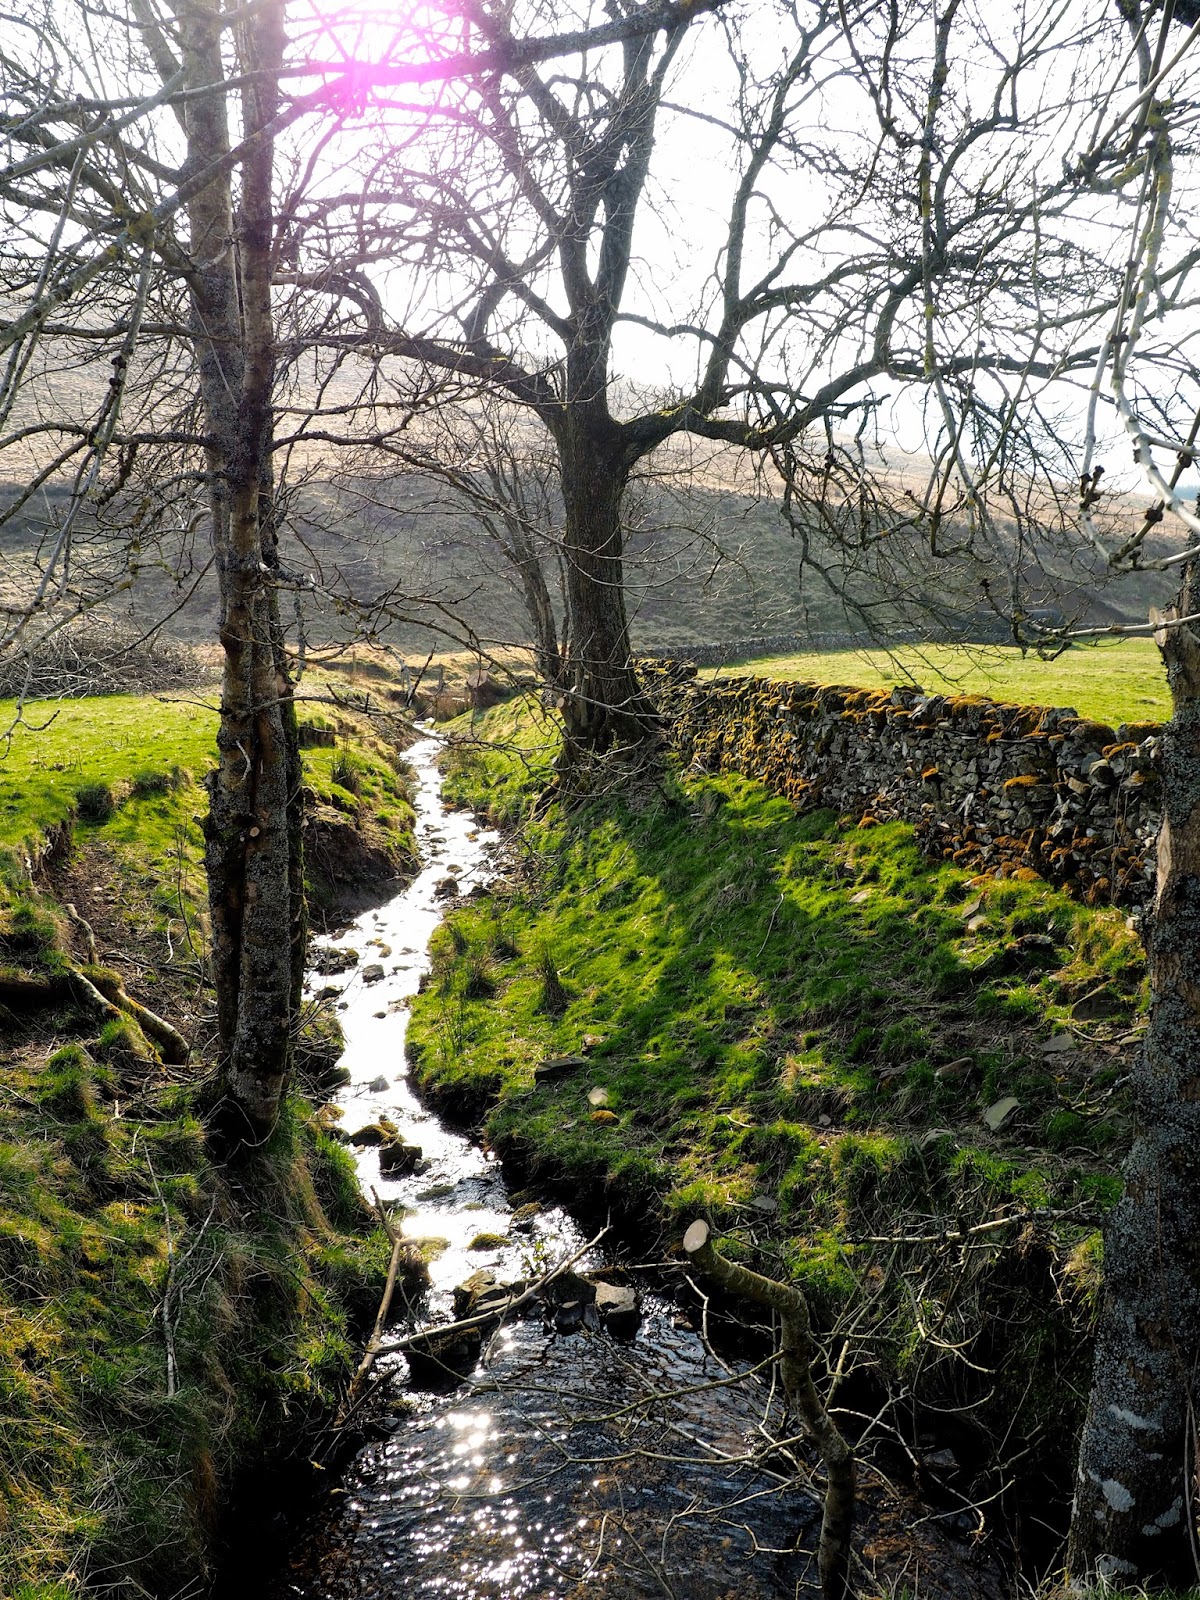 Countryside farm landscape in the Scottish Borders